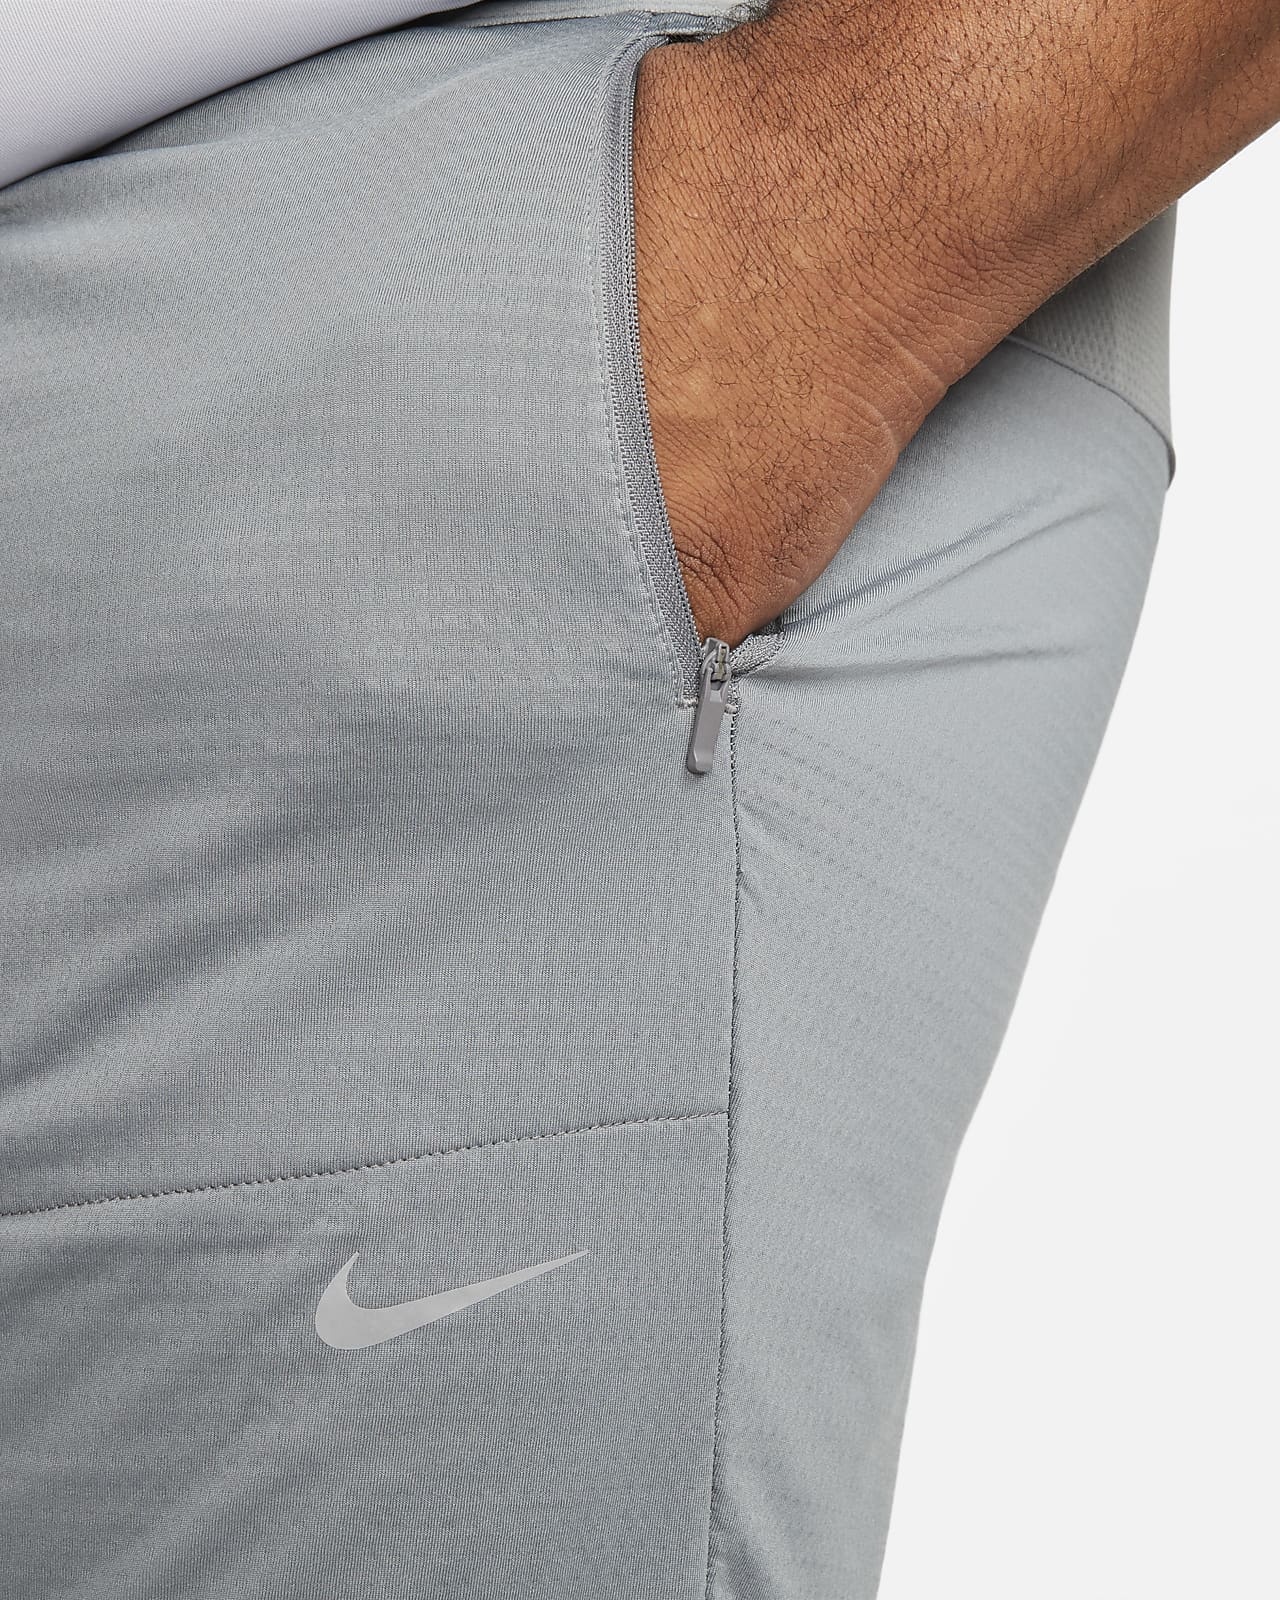 Nike Dri-FIT Phenom Elite Pantalón de running de tejido Knit - ES